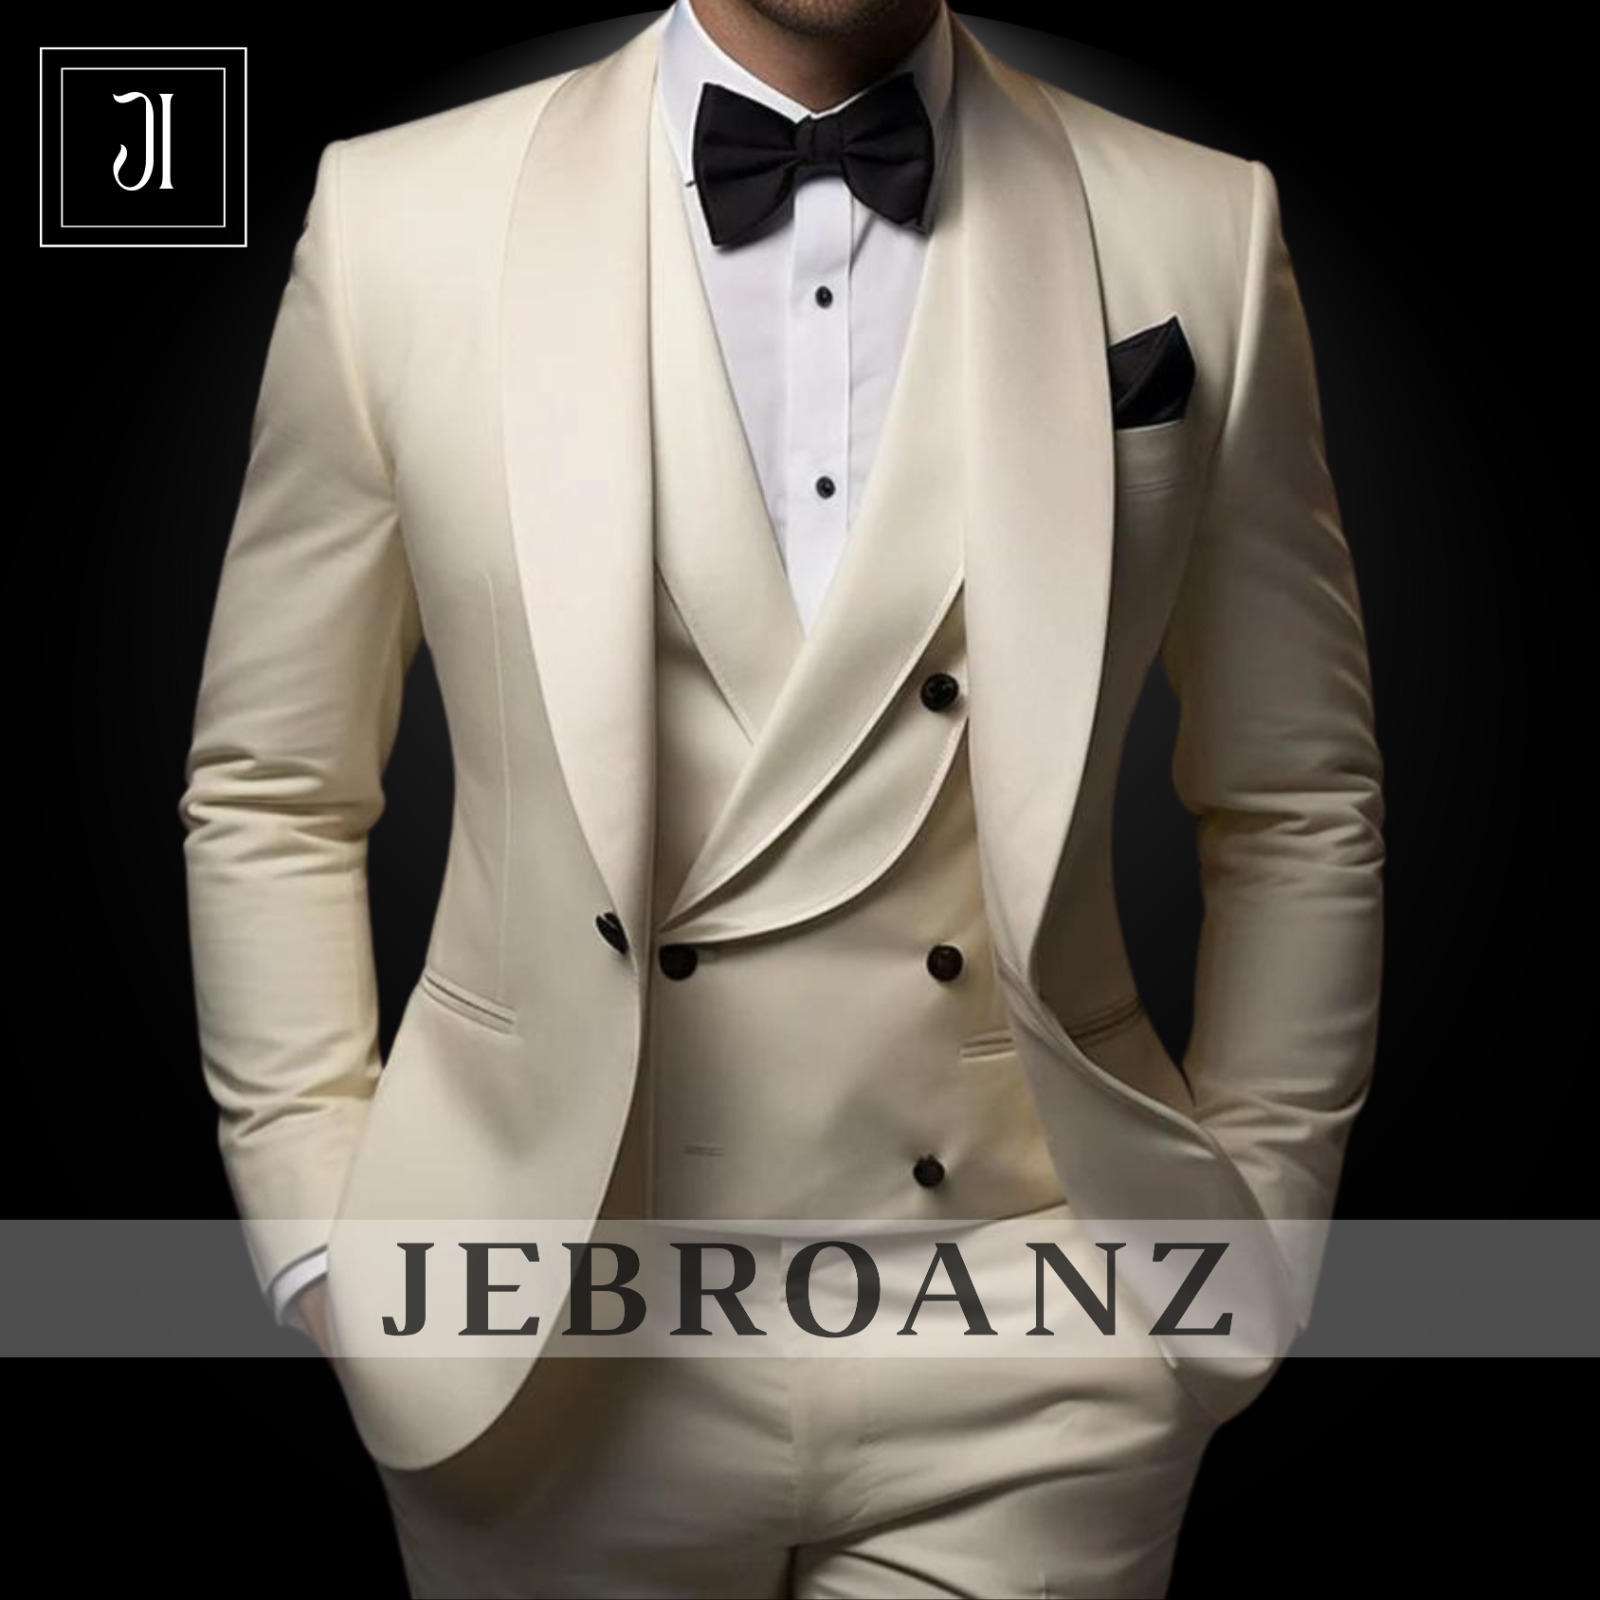 New Classy Off White Suit For men , Men Suit 3 piece, Classic Groom Wedding Suit